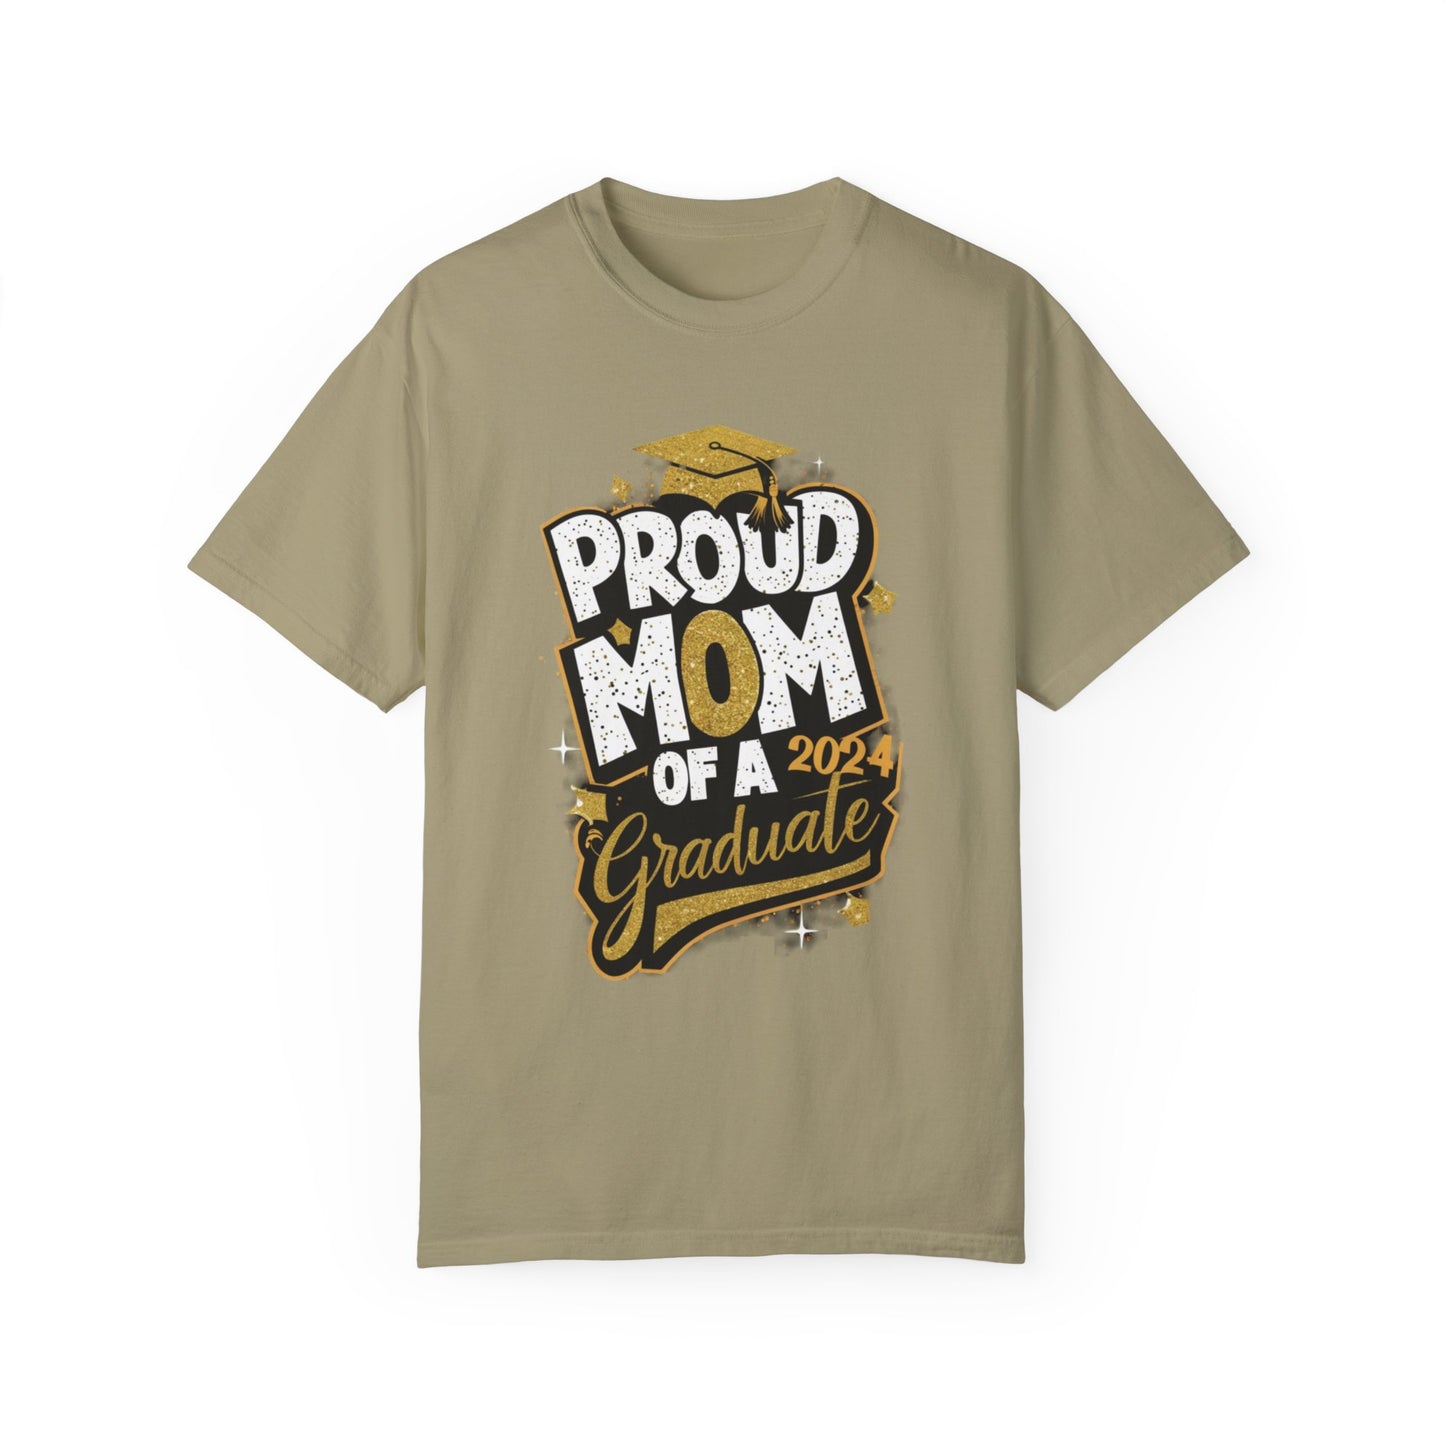 Proud Mom of a 2024 Graduate Unisex Garment-dyed T-shirt Cotton Funny Humorous Graphic Soft Premium Unisex Men Women Khaki T-shirt Birthday Gift-11